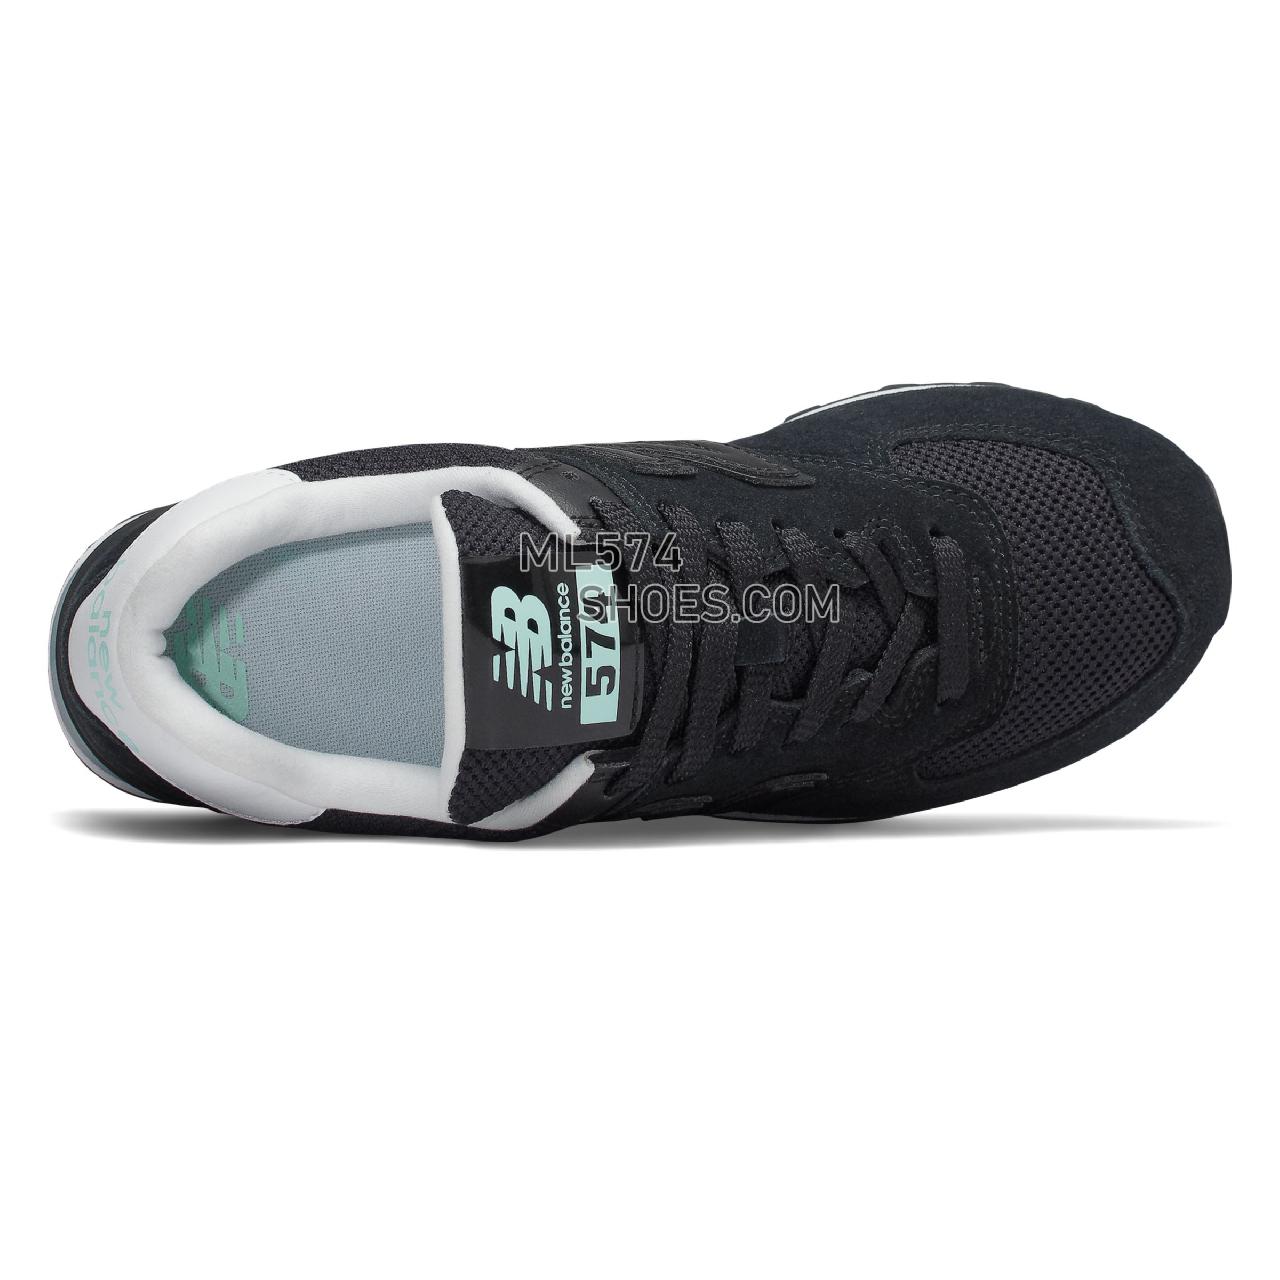 New Balance 574 - Women's Classic Sneakers - Black with Light Reef - WL574NPB